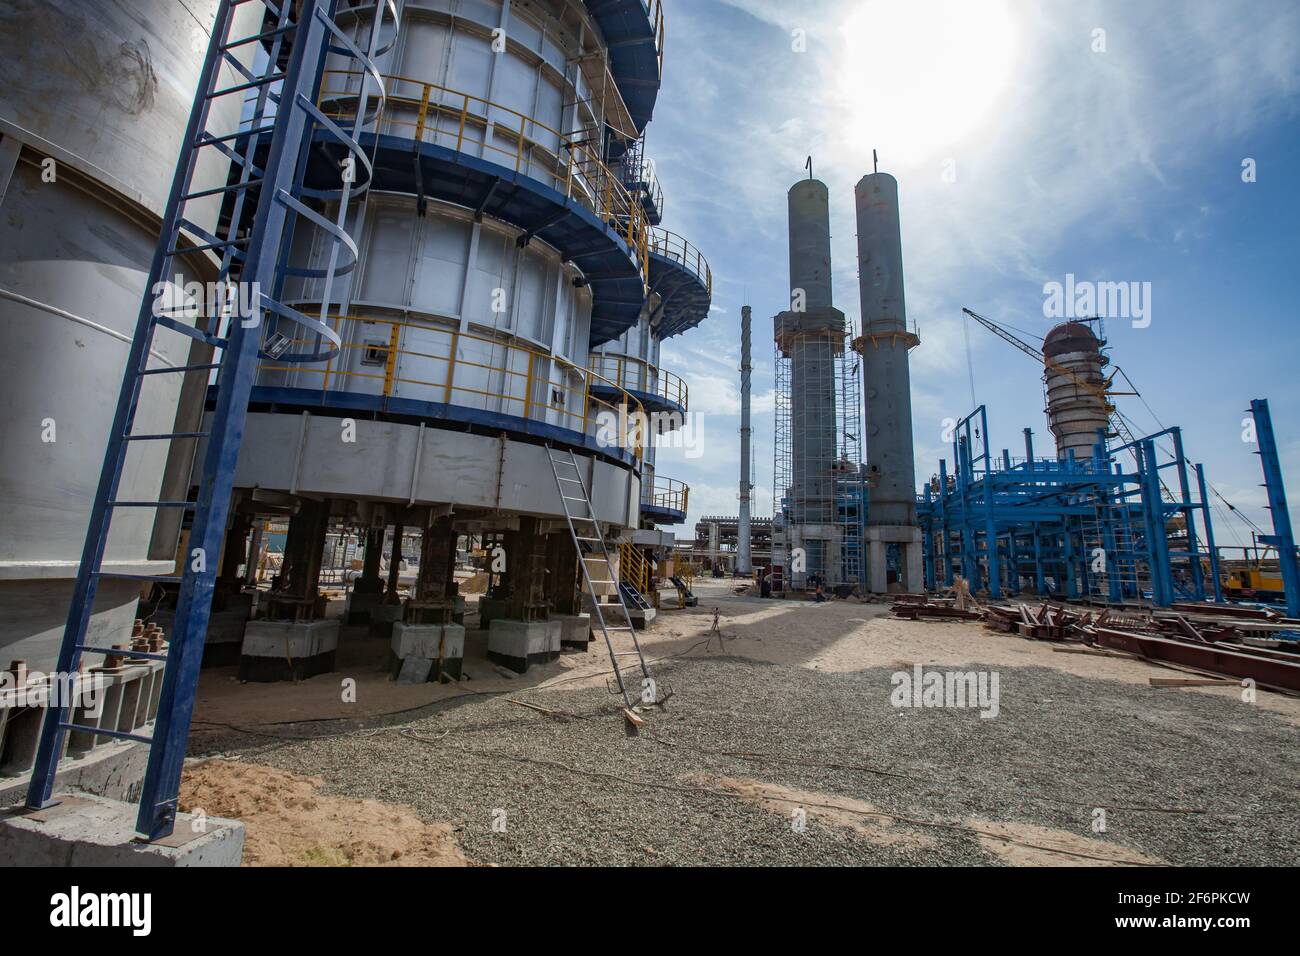 Aktau,Kazakhstan-May 19,2012: Construction of asphaltic bitumen plant. Refinery columns, smoke stack, mobile crane and blue steel building structure. Stock Photo